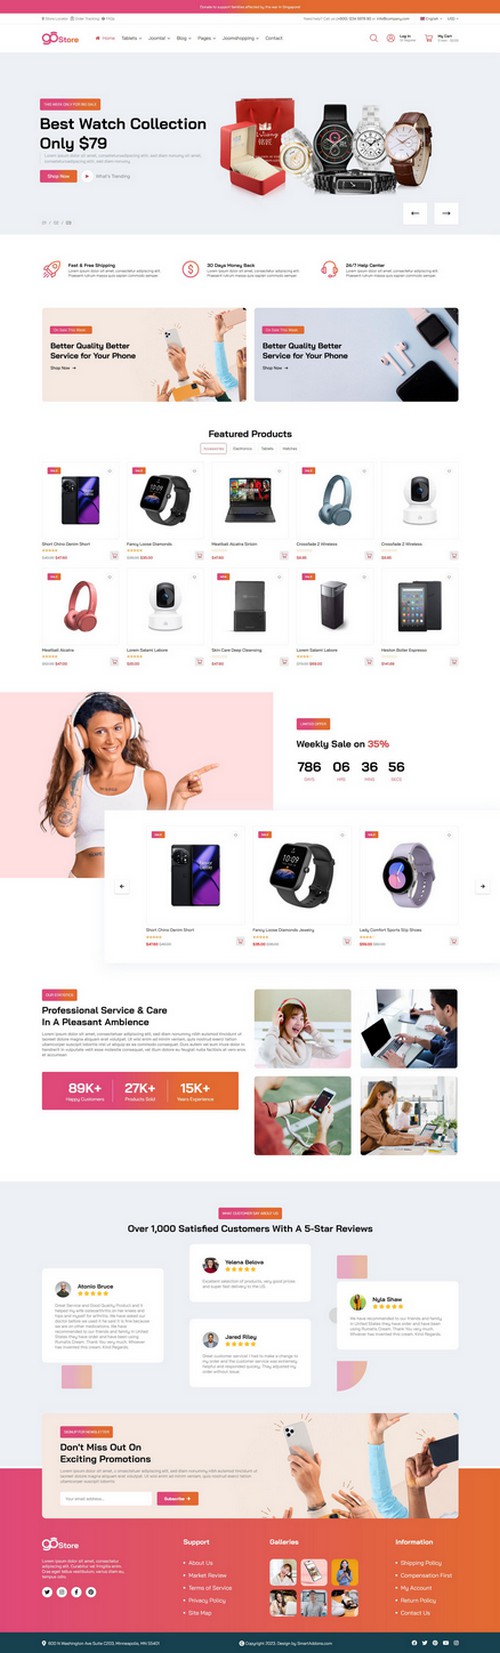 GoStore - Hitech/Digital Store Joomla 4 Template